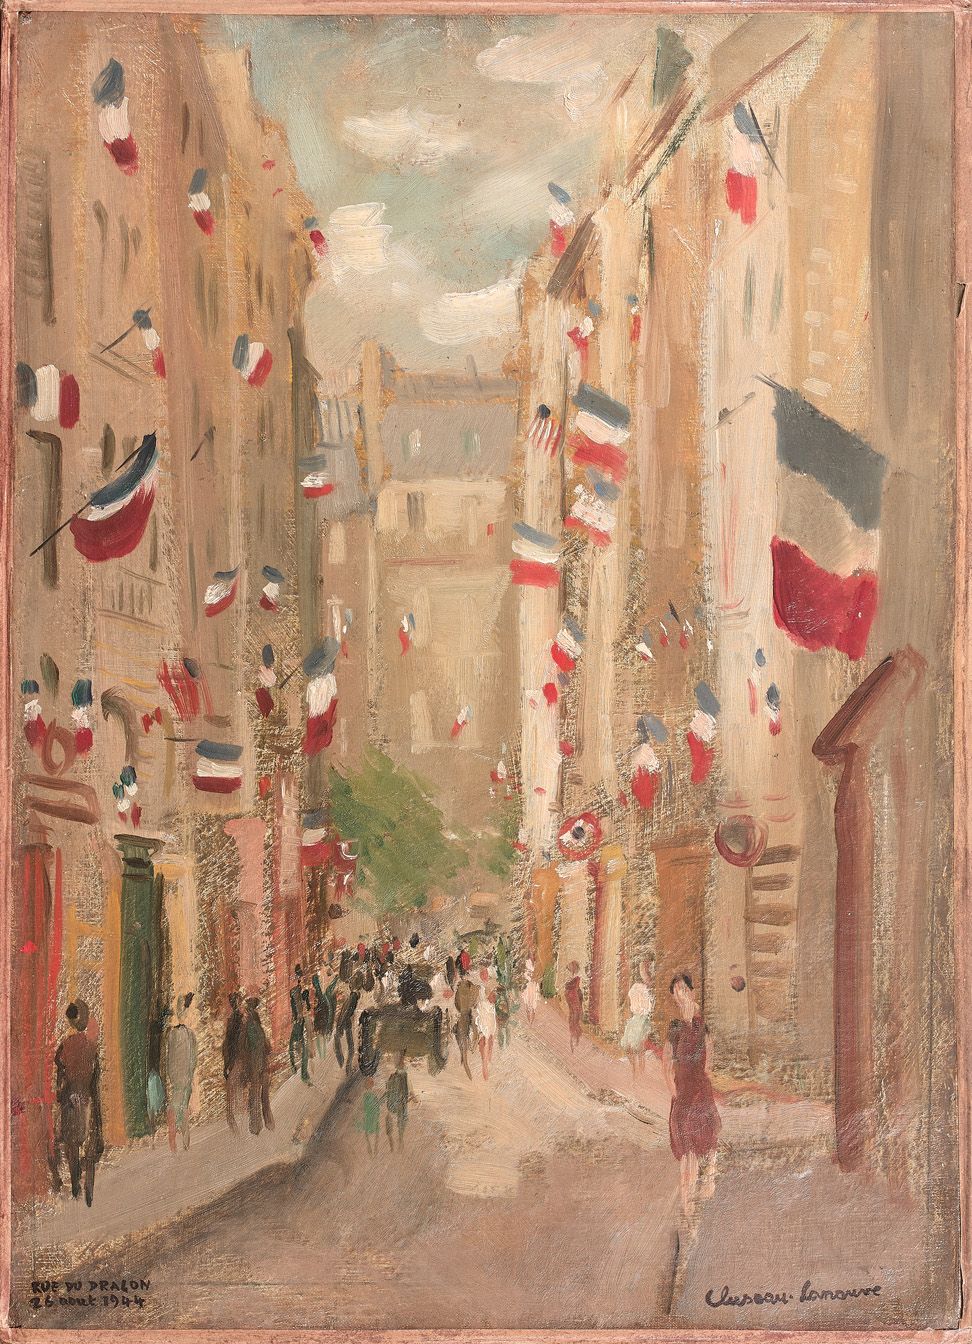 Null Jean Cluseau-Lanauve (1894-1997)

巴黎，龙亭街，1944年8月26日

布面油画，右下方有签名，左下方有日期和标题。&hellip;